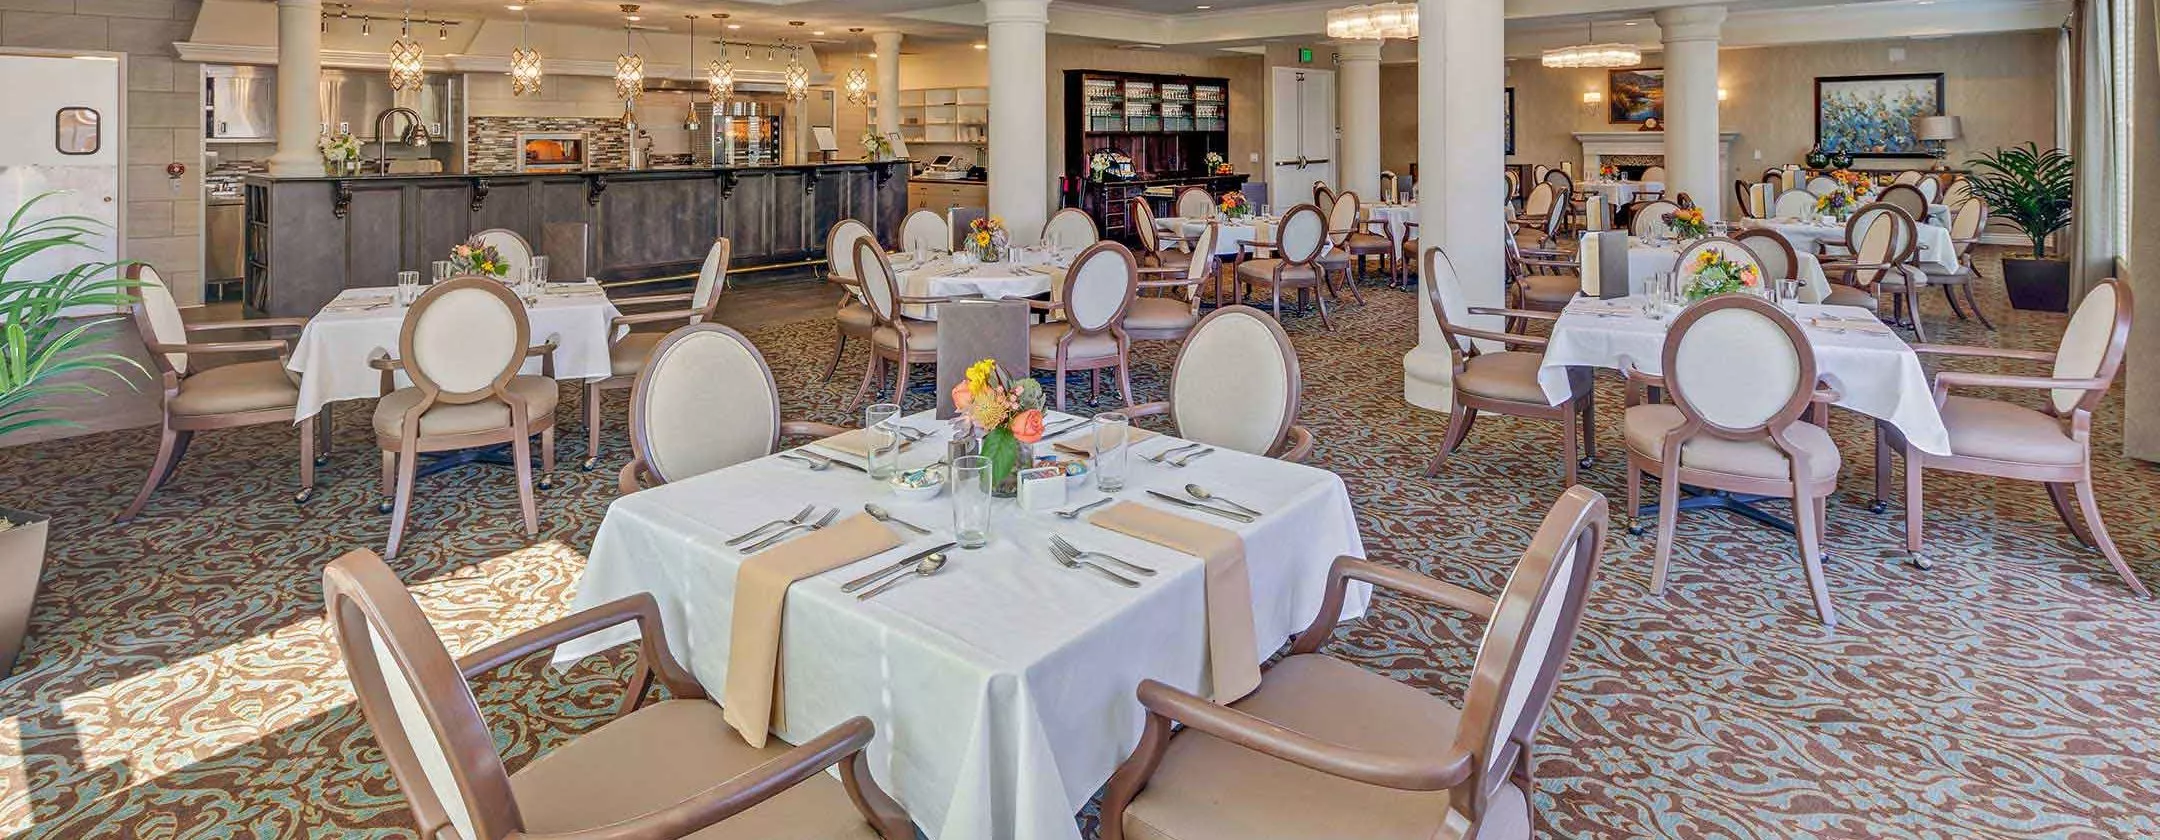 El Dorado Hills dining room